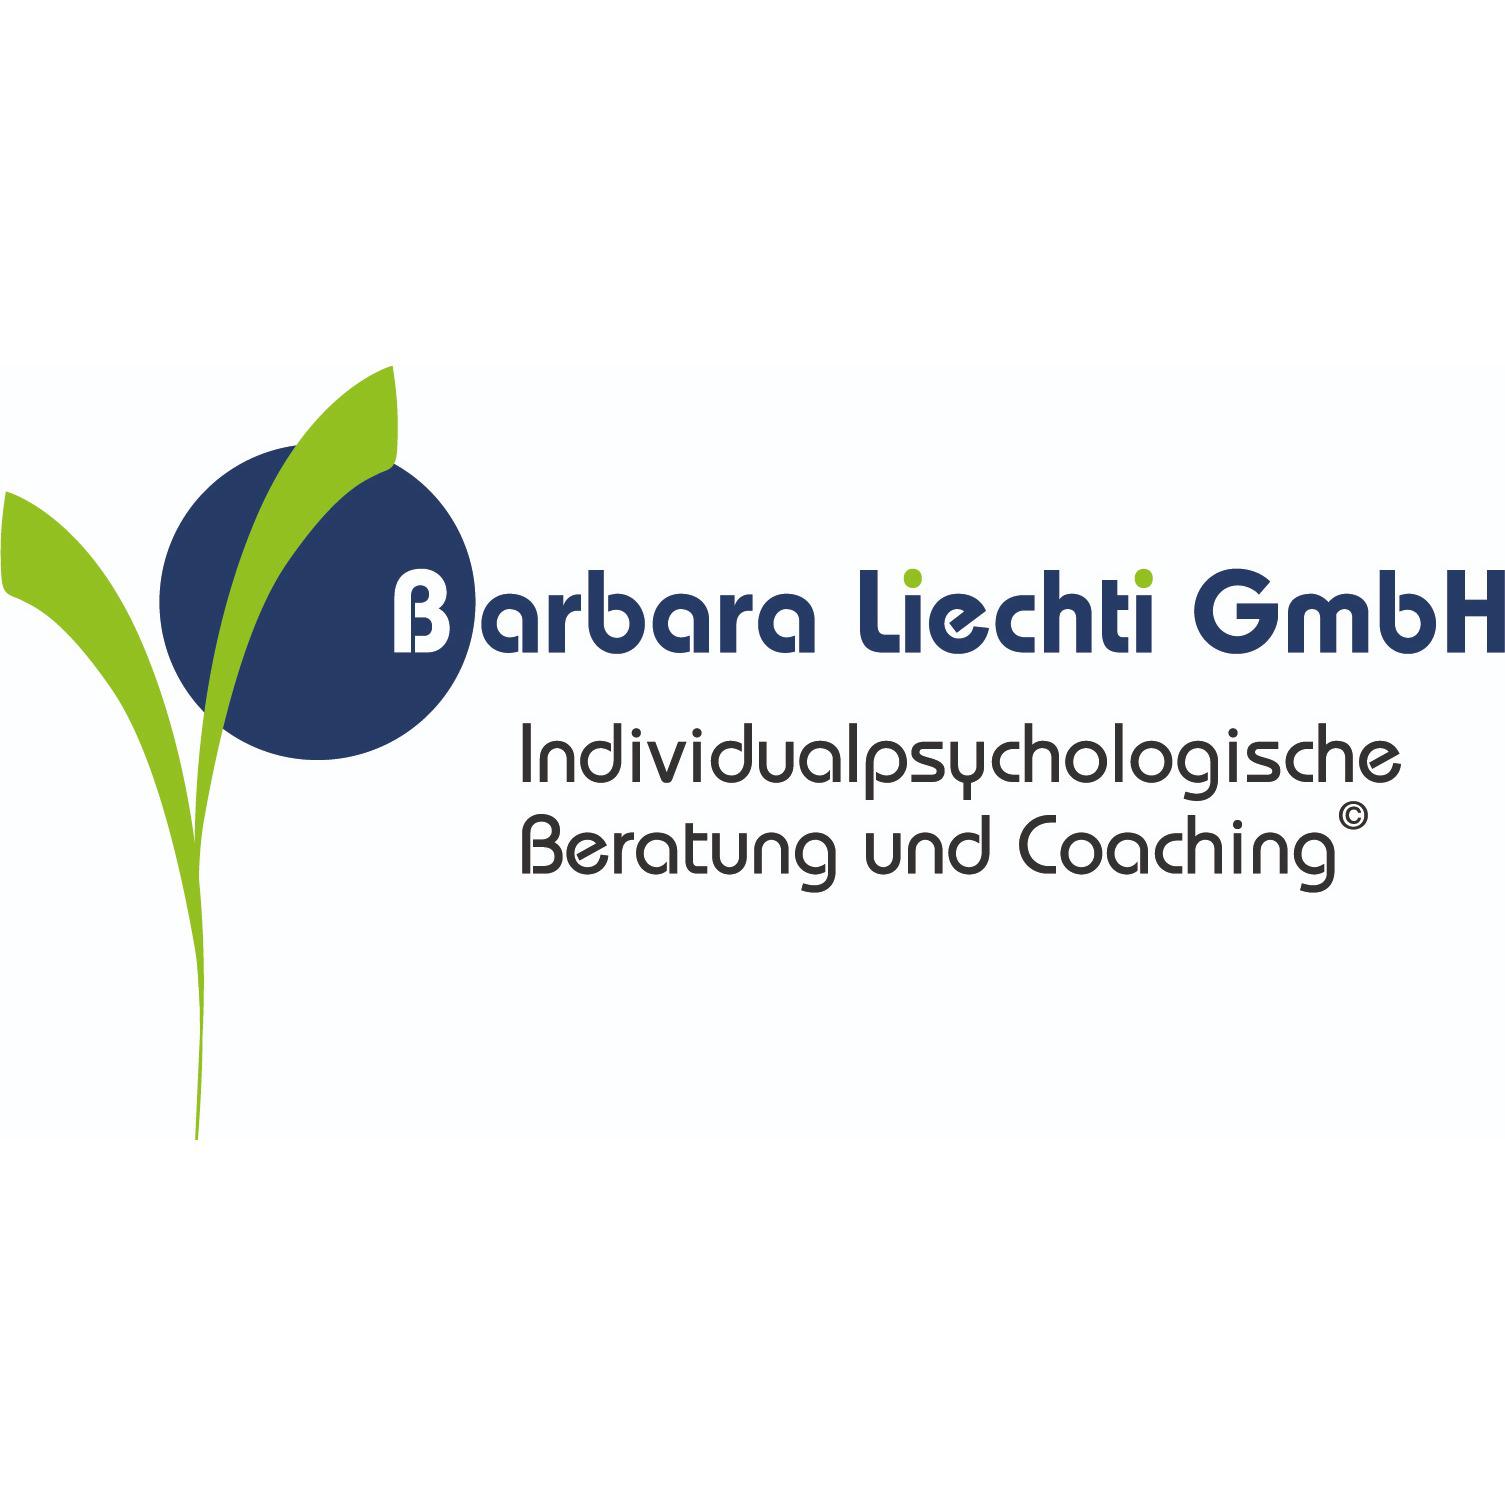 Barbara Liechti GmbH Individualpsychologische Beratung und Coaching Logo